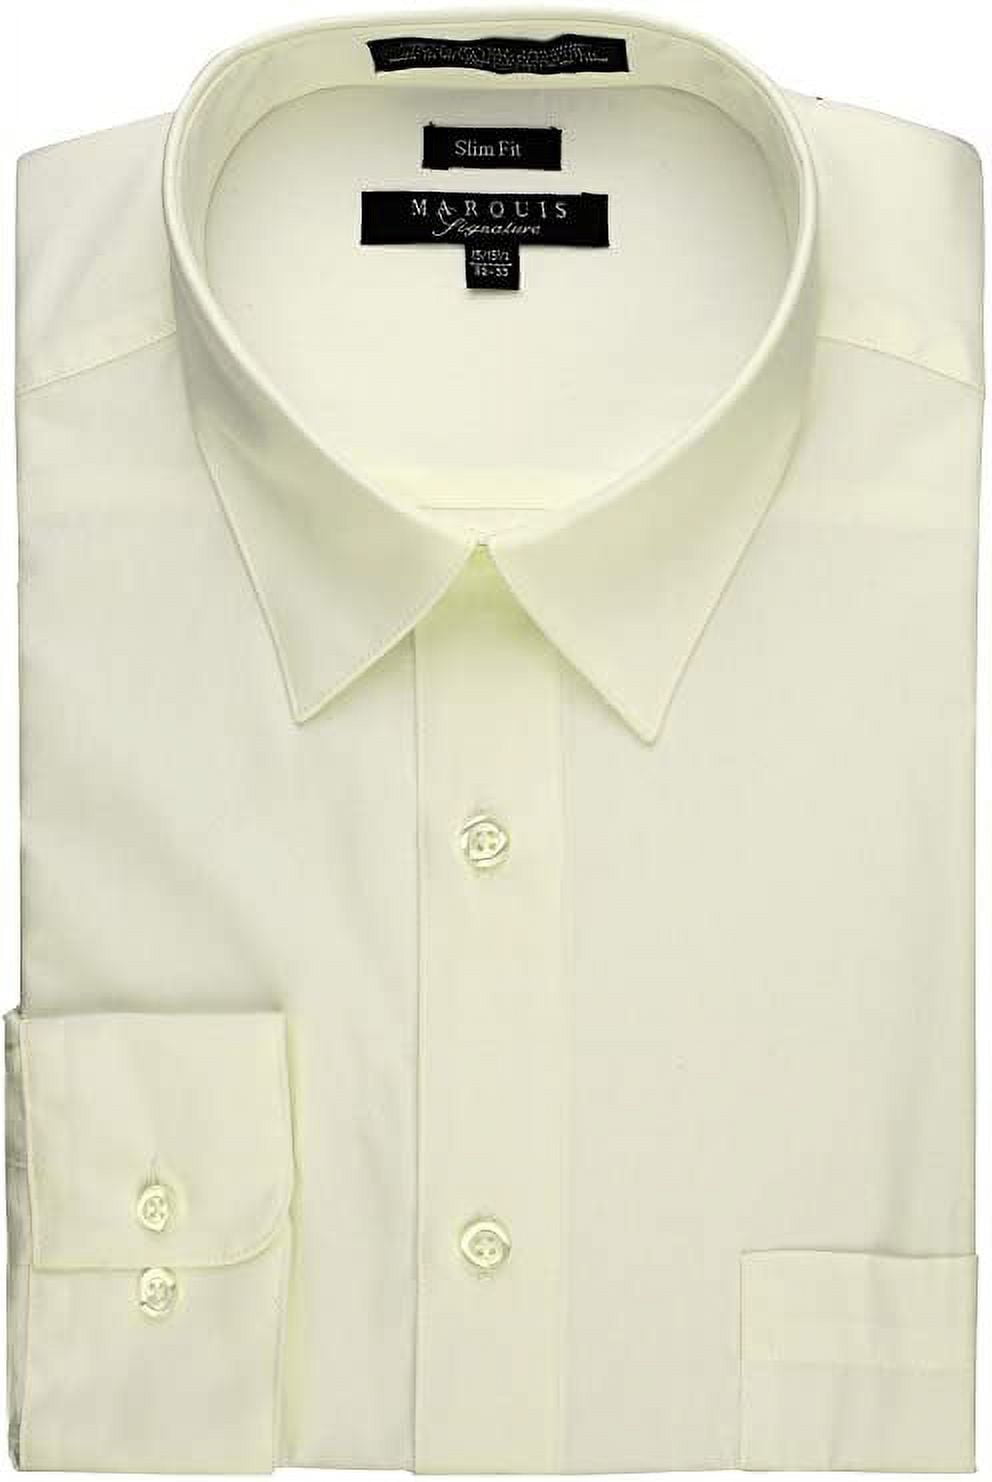 Chain Print Military Style Silk Shirt - Luxury Beige